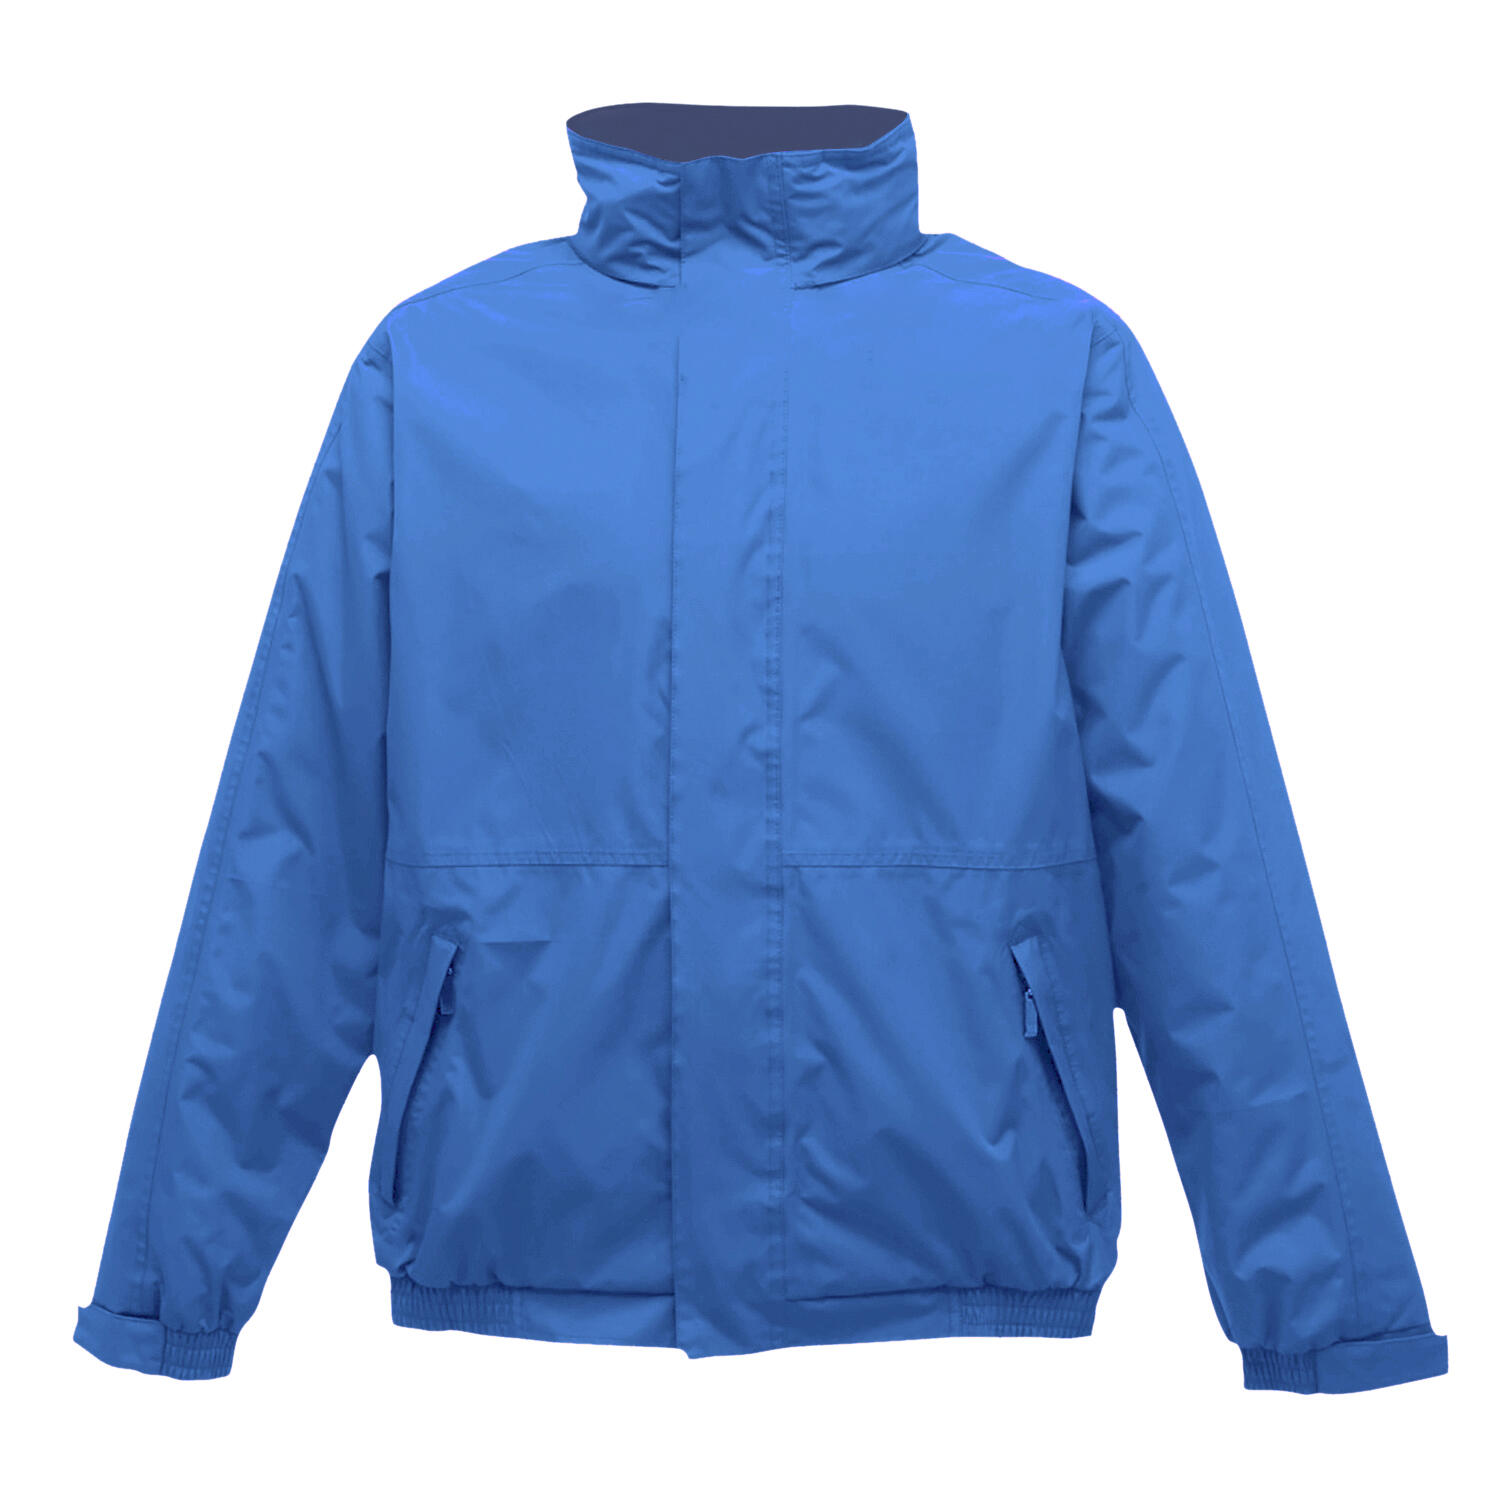 Dover Waterproof Windproof Jacket (ThermoGuard Insulation) (Royal/Dark Navy) 1/5